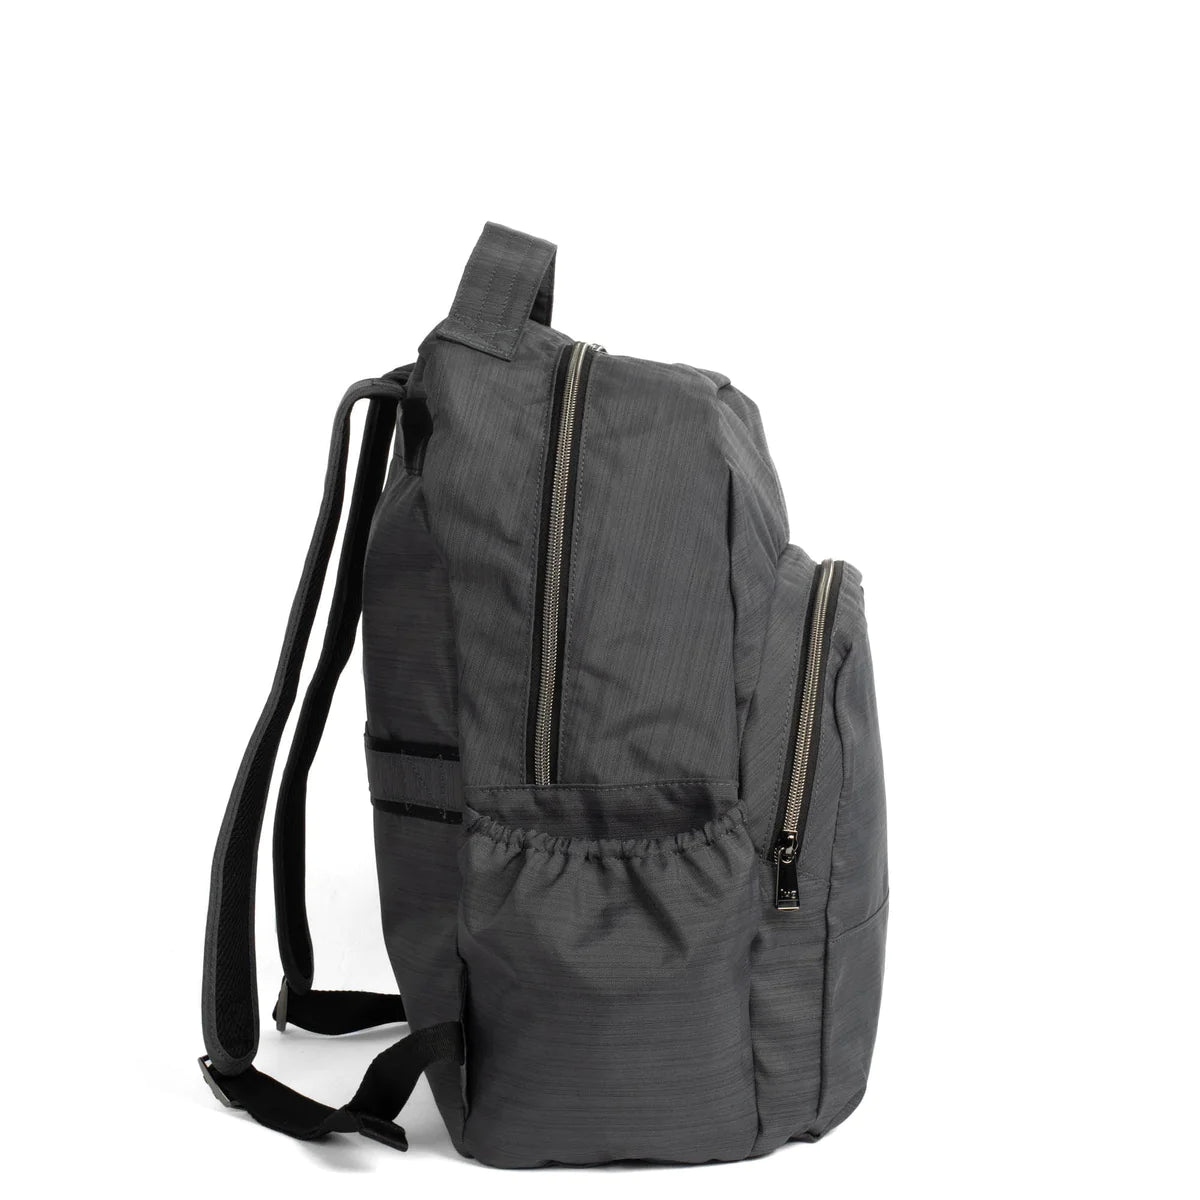 LUG Echo 2 Packable Backpack in Brushed Grey